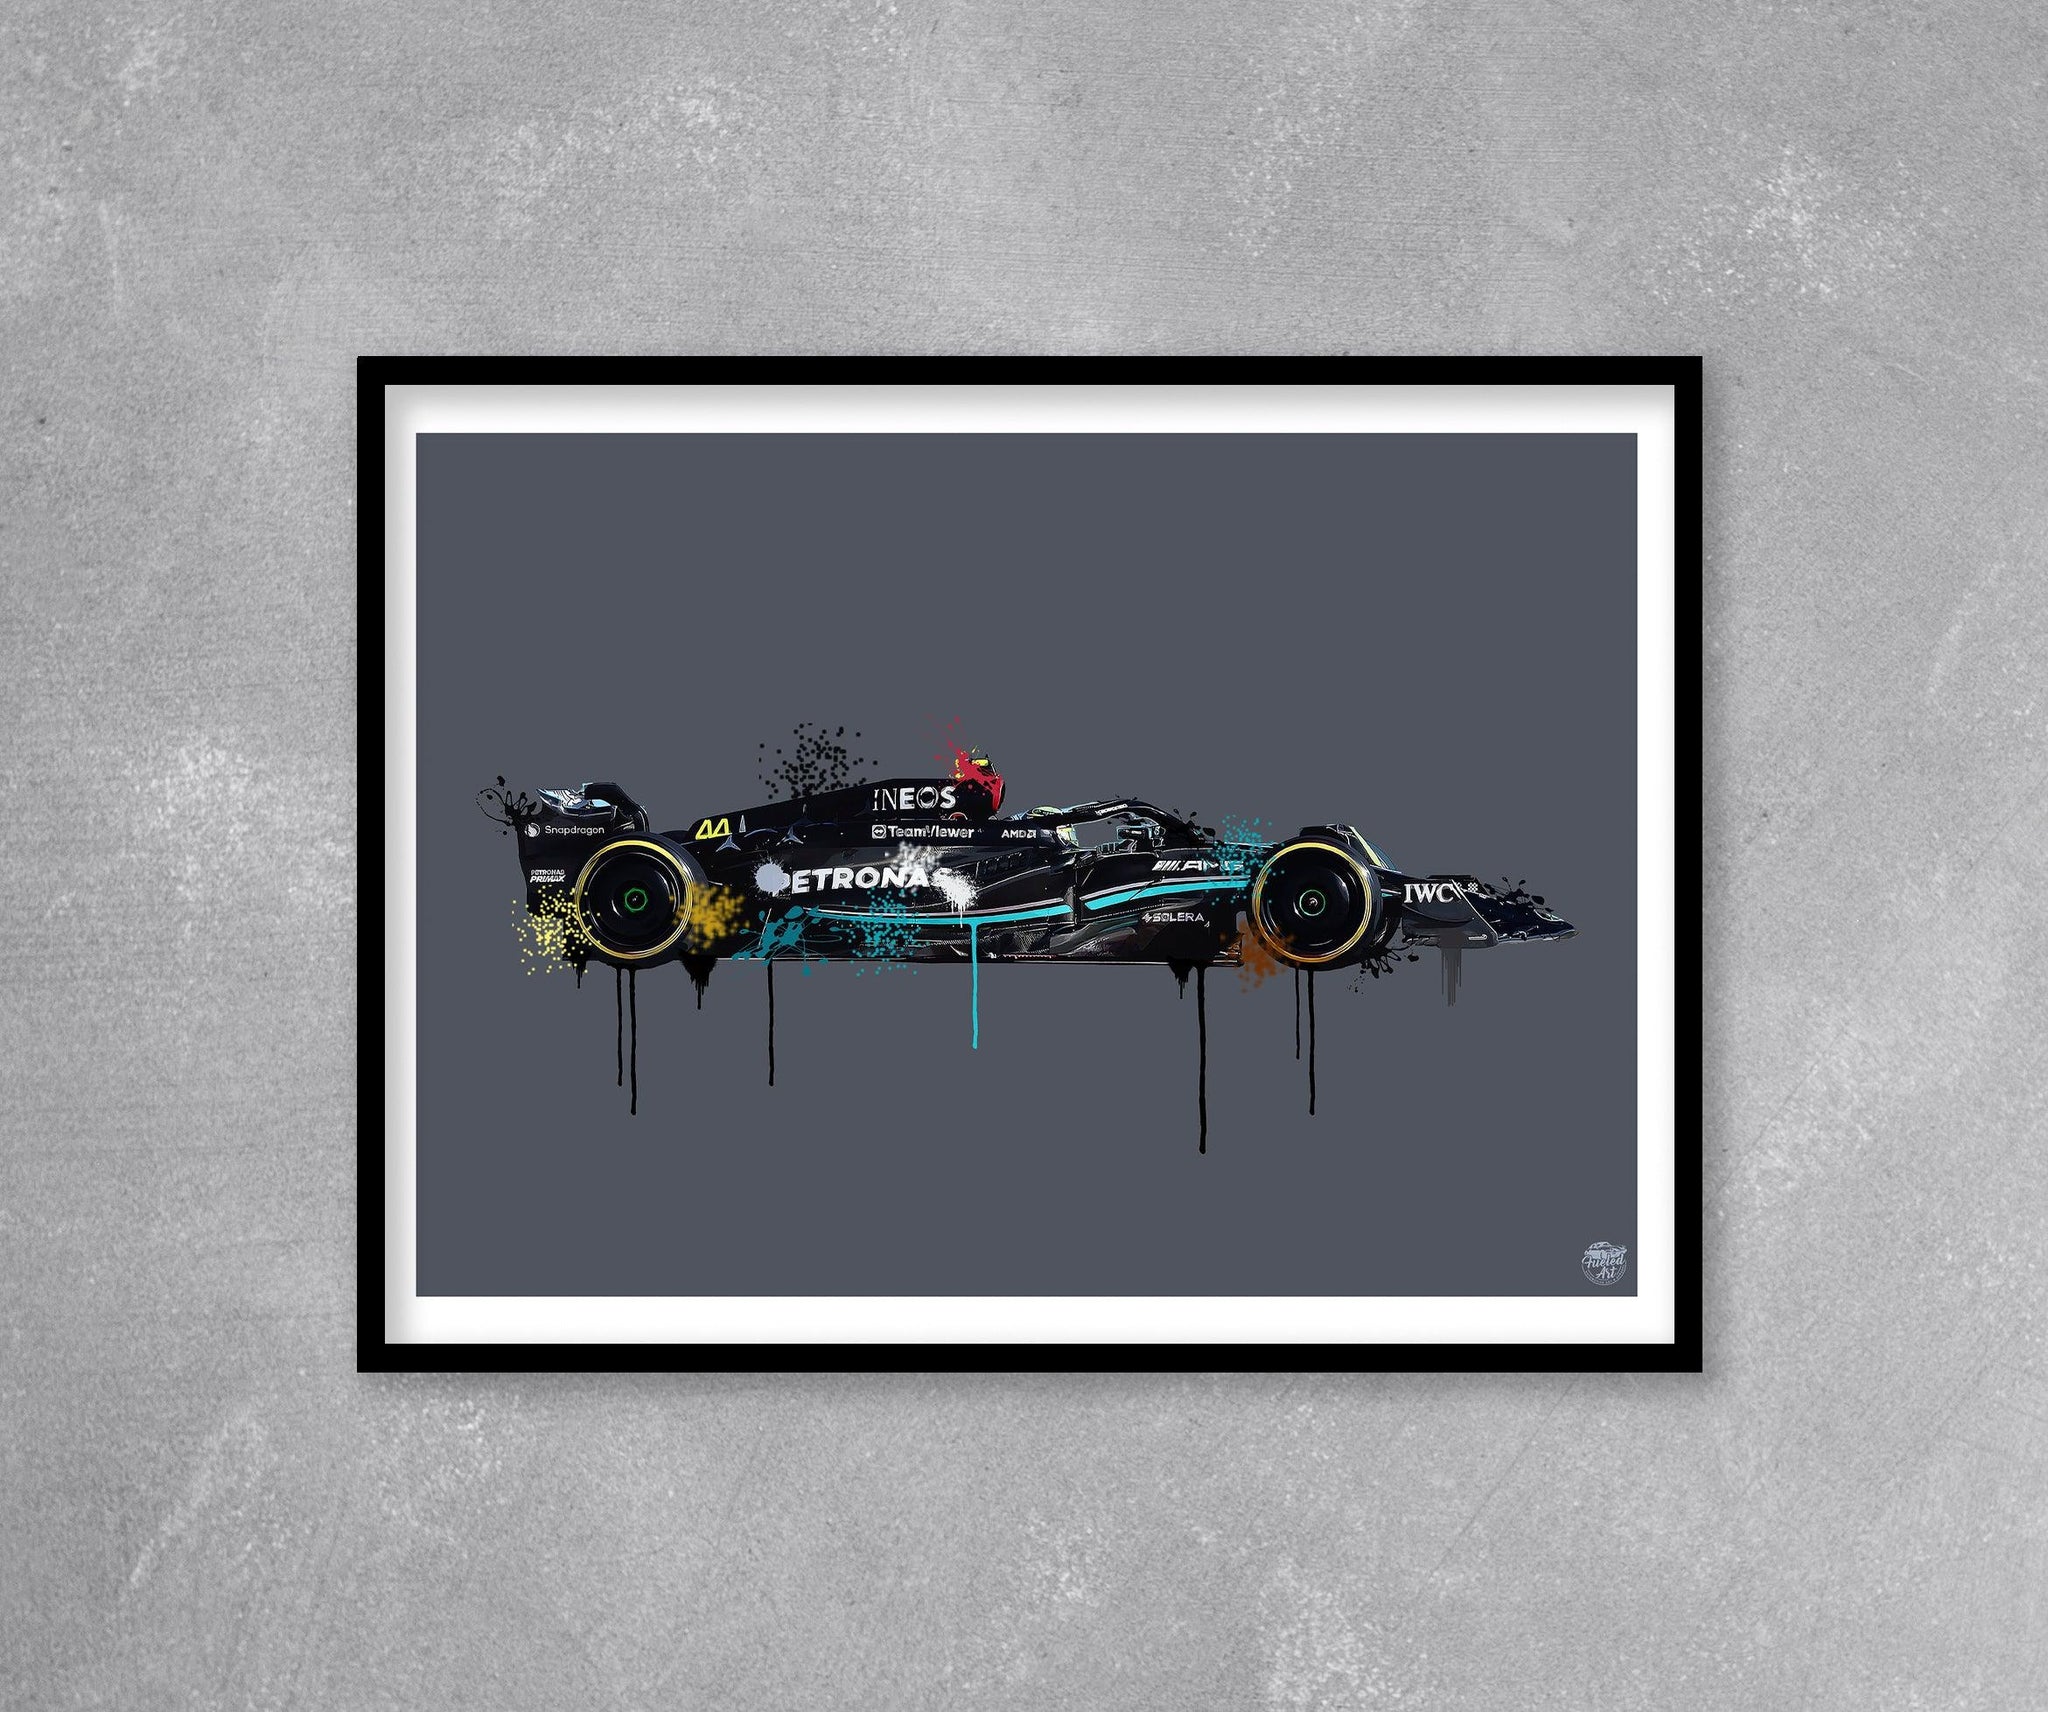 Lewis Hamilton, Mercedes print by Motorsport Images